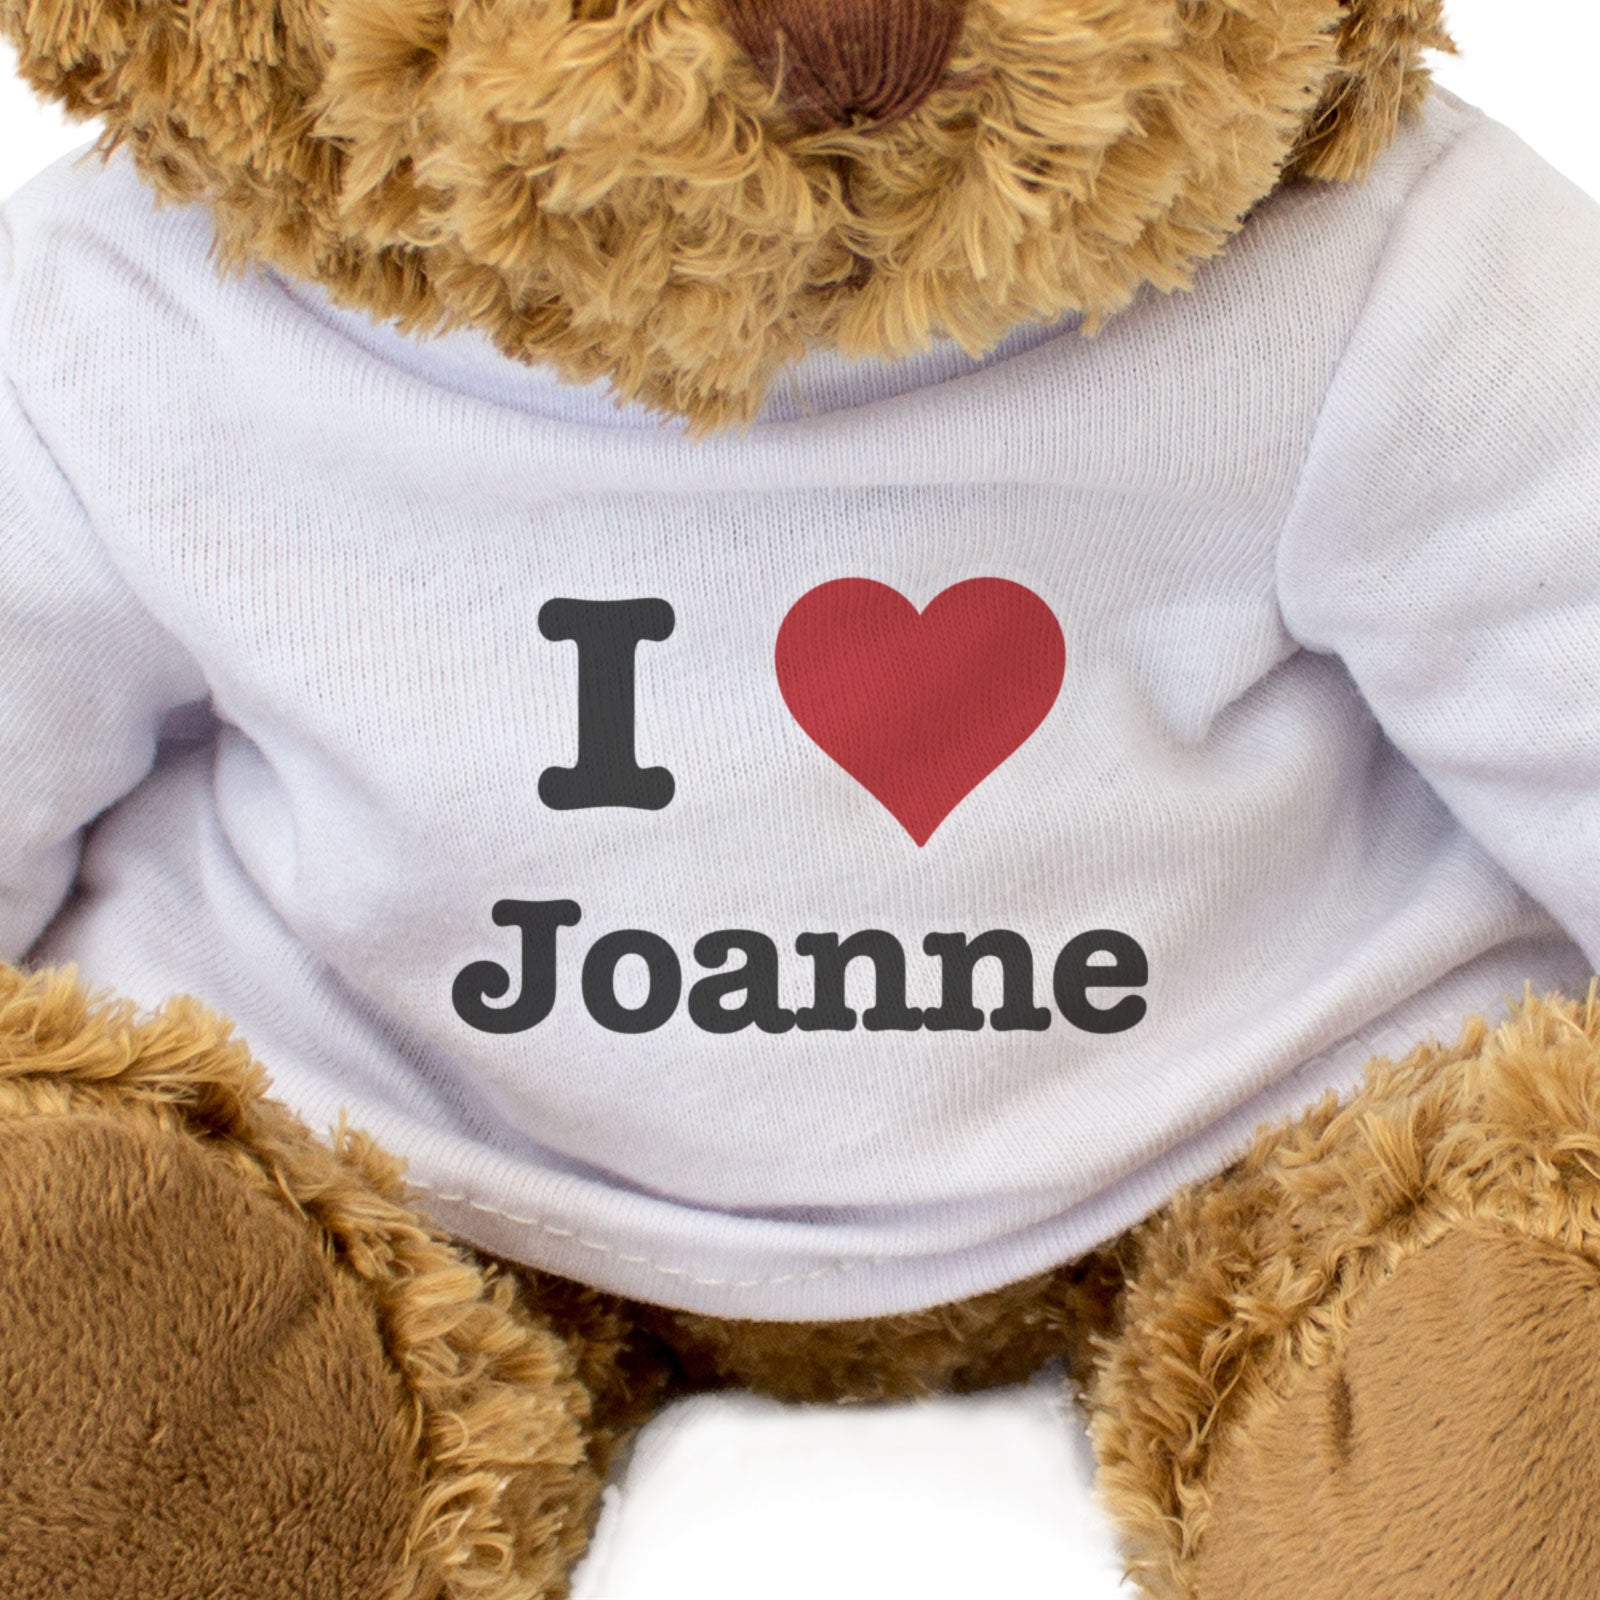 I Love Joanne - Teddy Bear